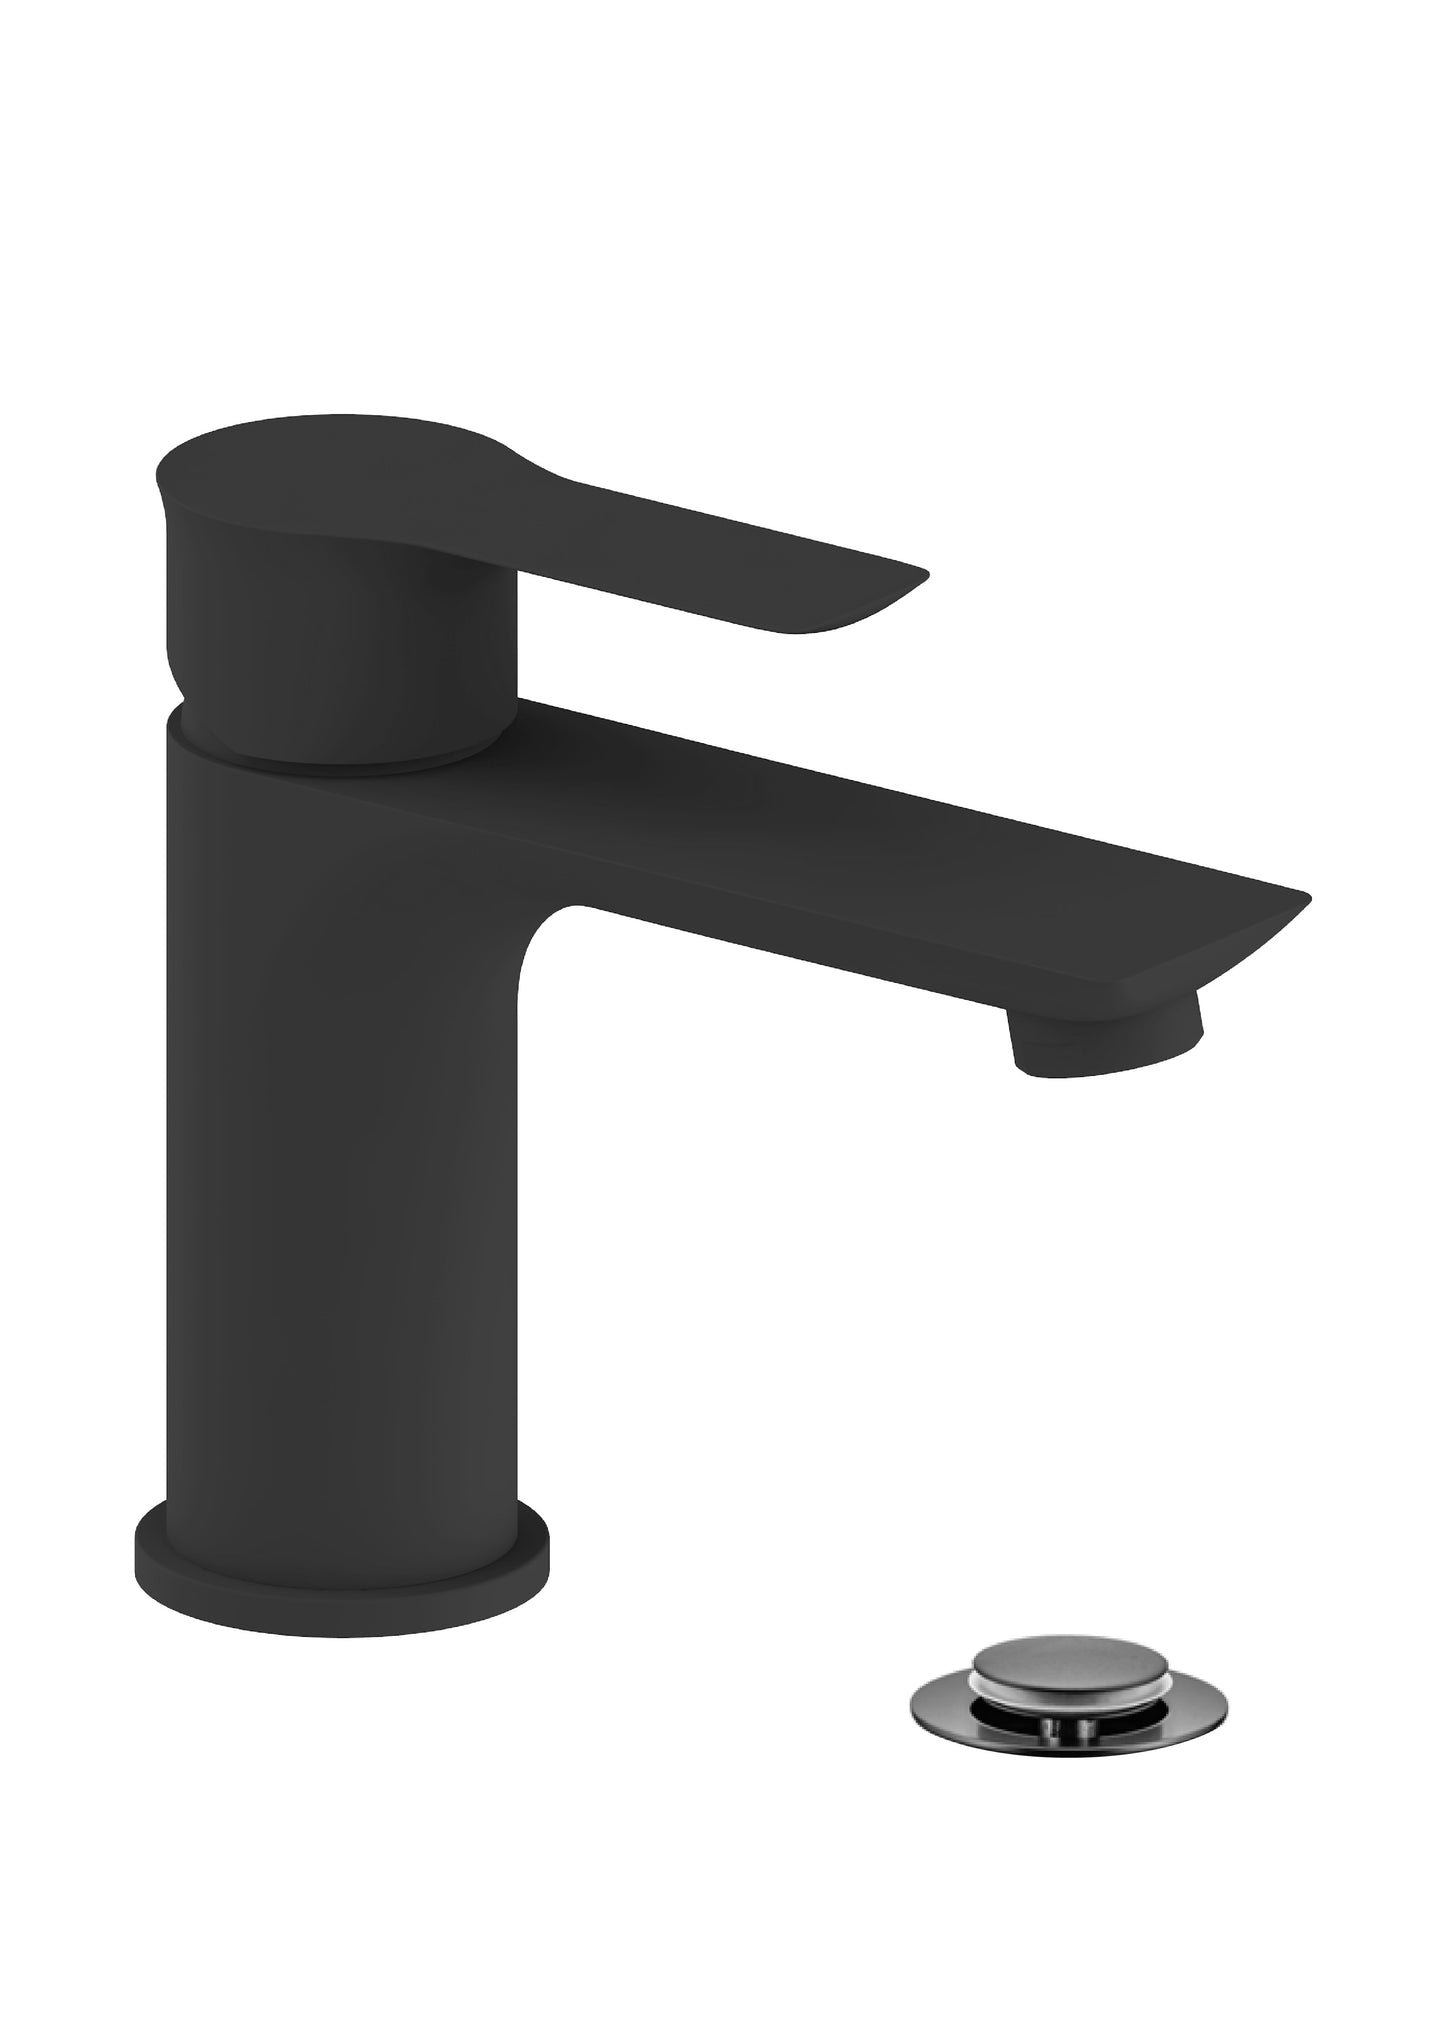 Tenzo Galia Single Hole Lavatory Faucet With Overflow Drain